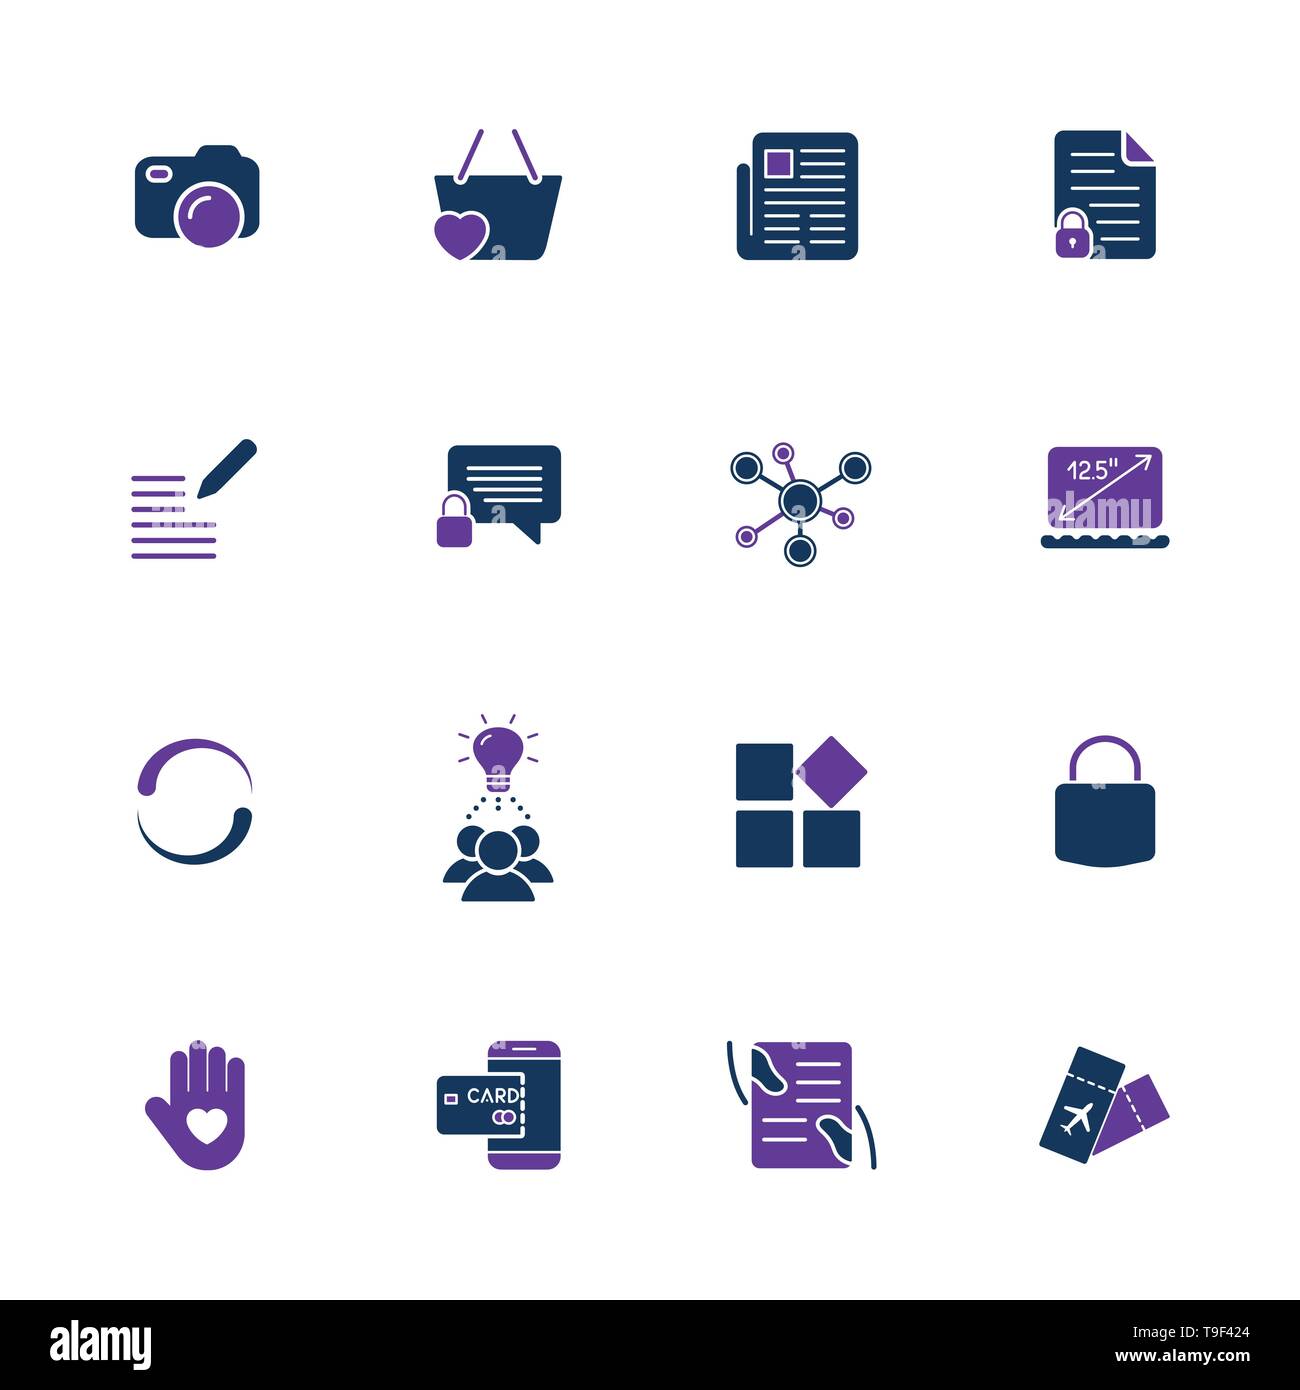 Stil und sauber Icons Pack für Webdesign oder mobile Design. Stock Vektor